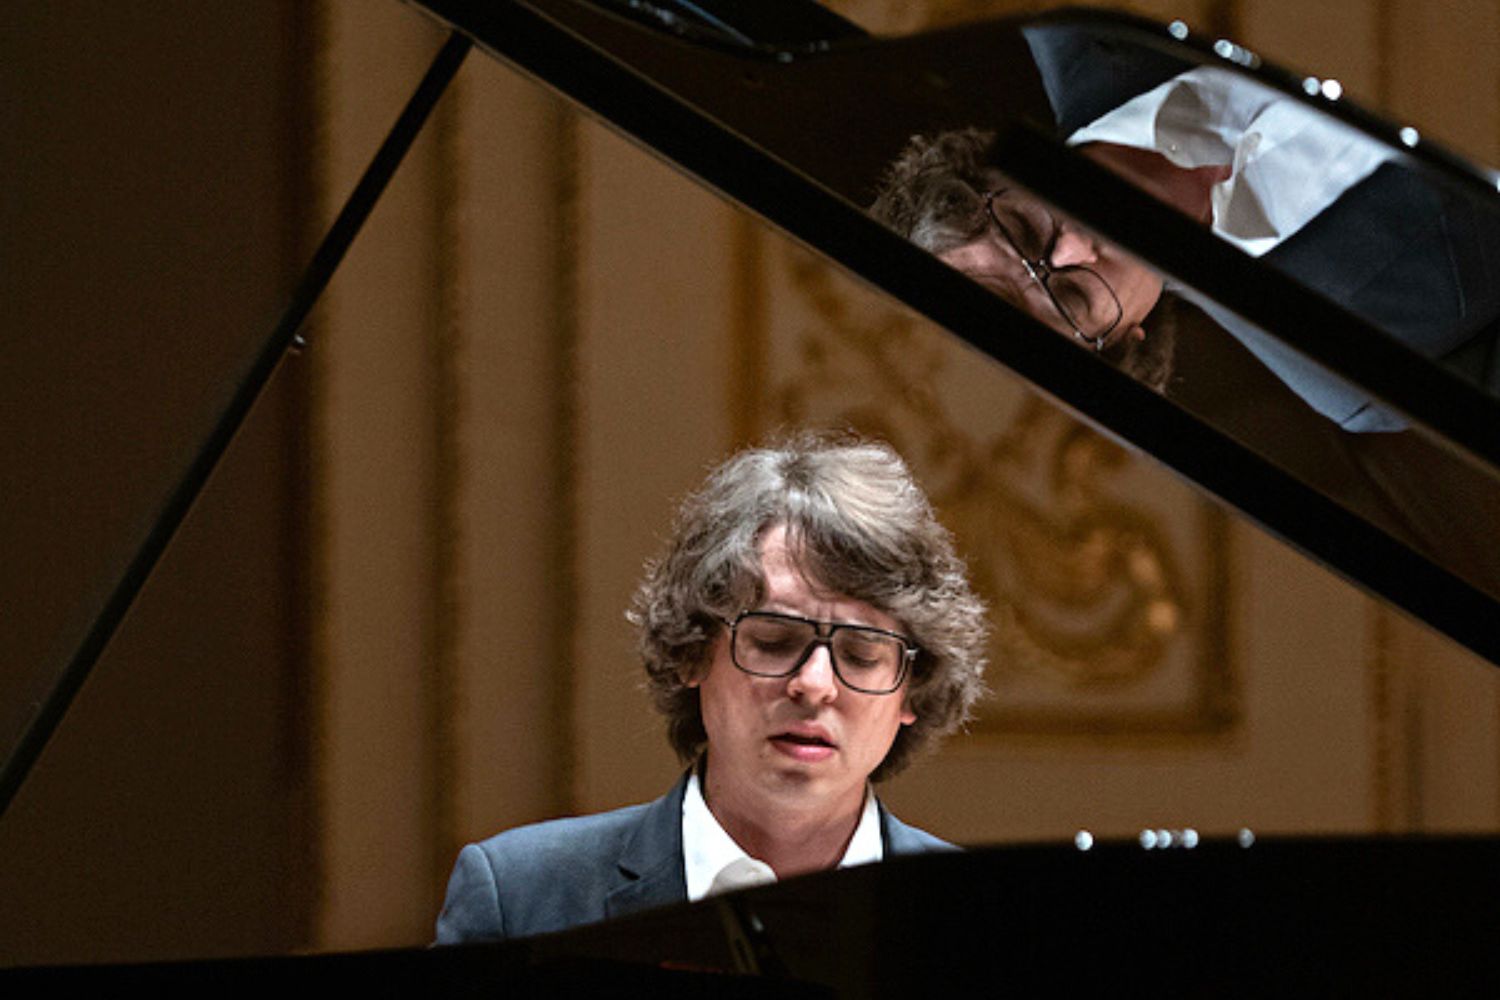 Pianist Debargue shows world-class skills in Carnegie recital